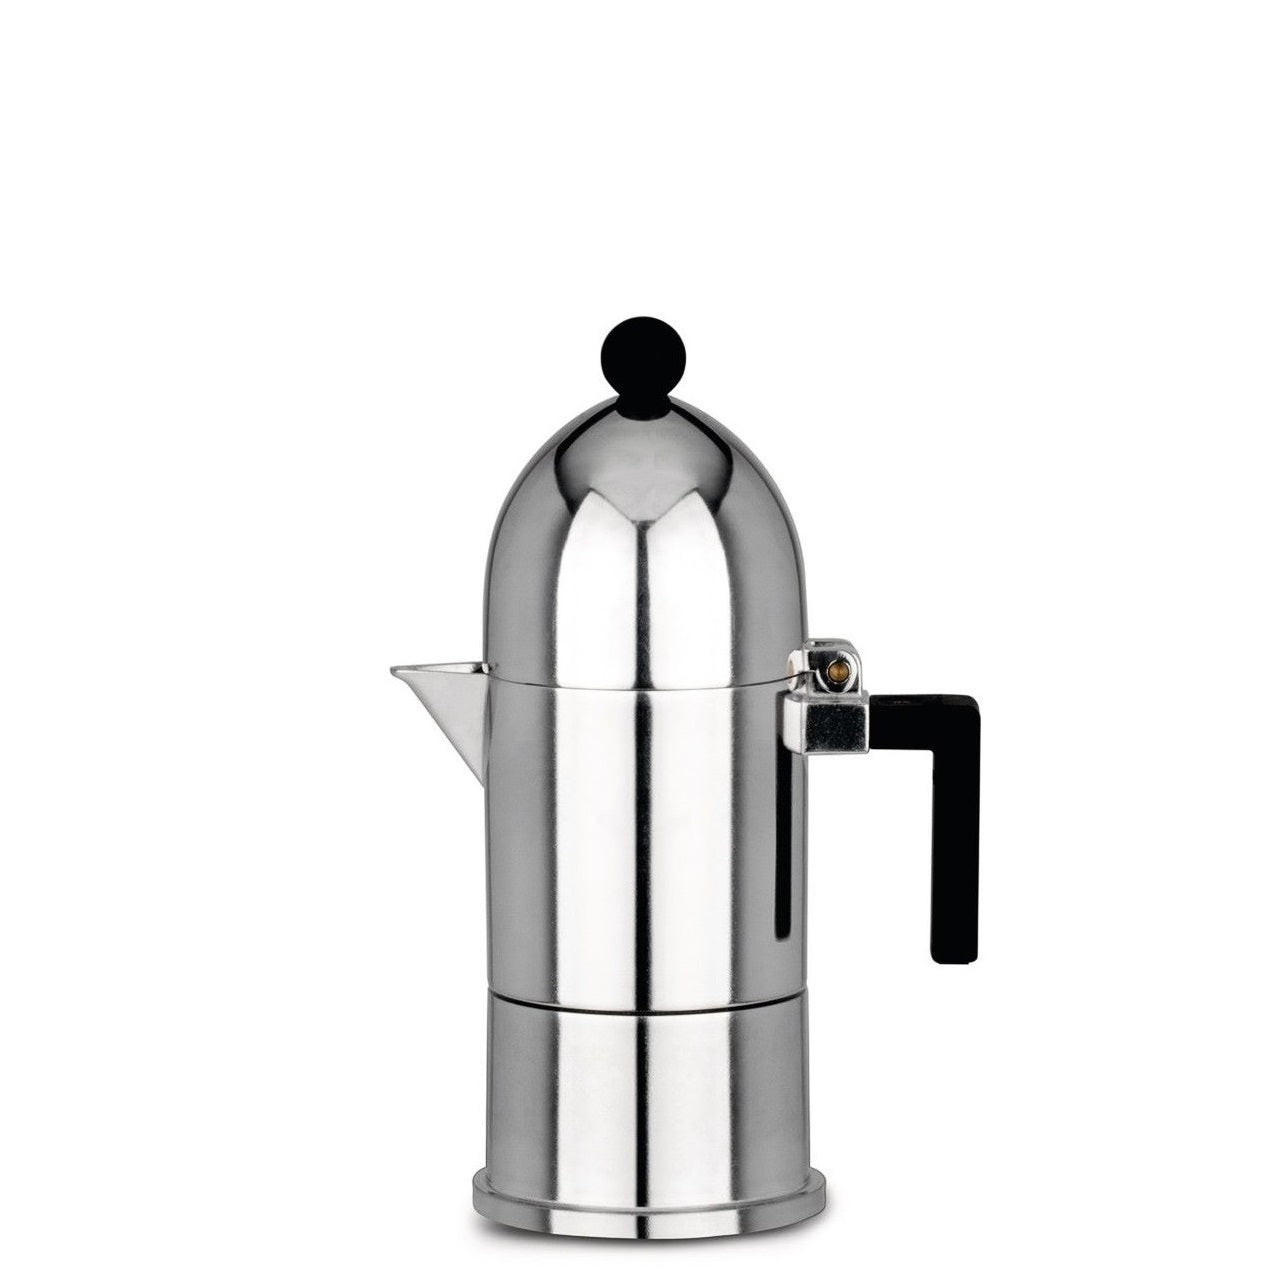 Alessi La Cupola Espresso Coffee Maker 3 Cup